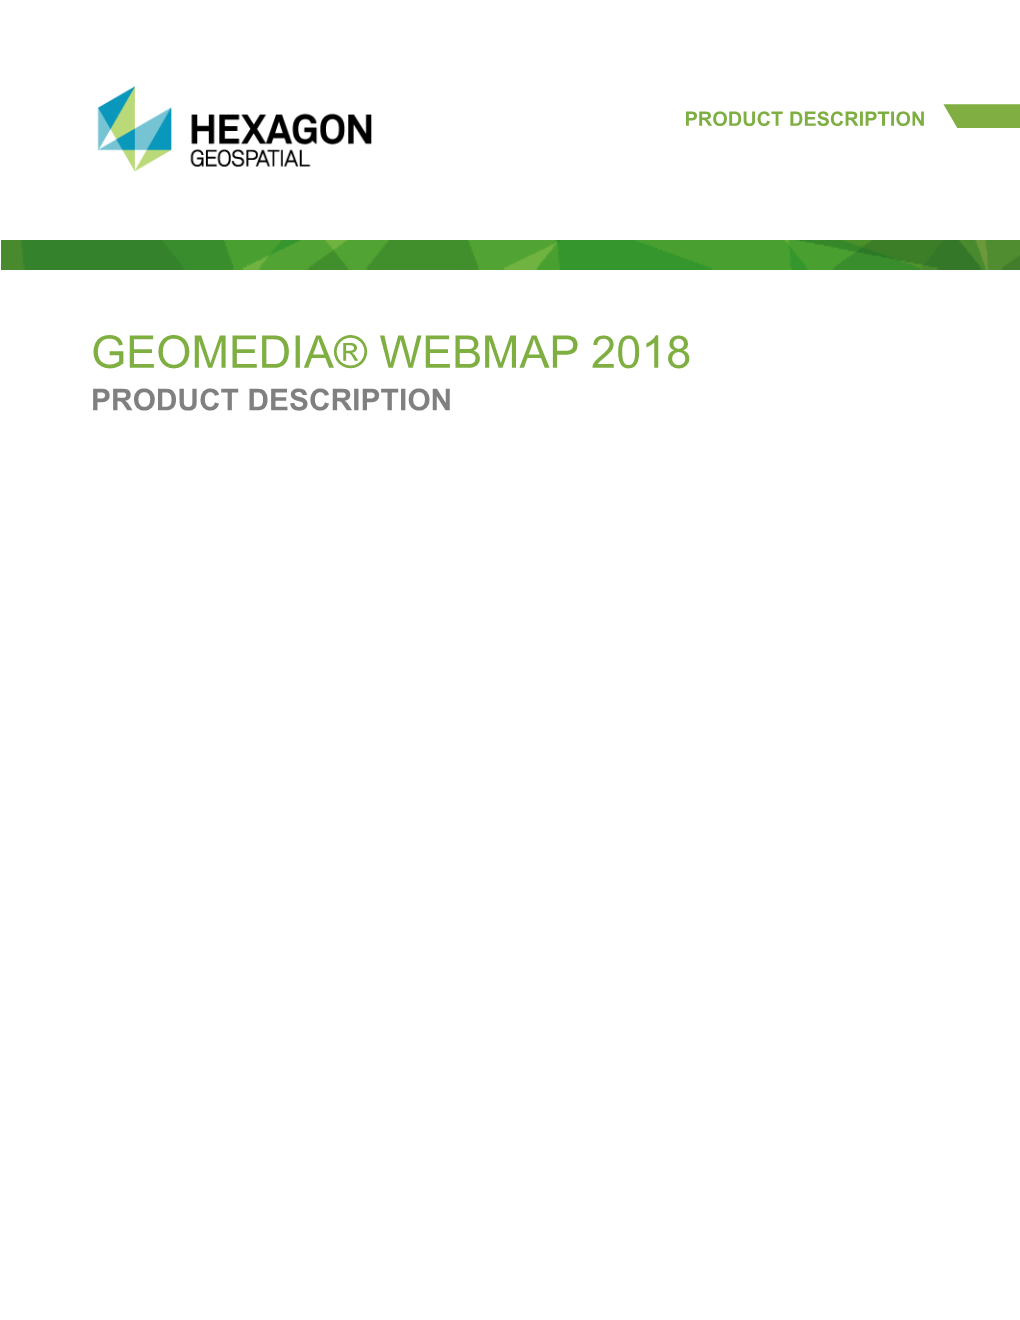 Geomedia® Webmap 2018 Product Description